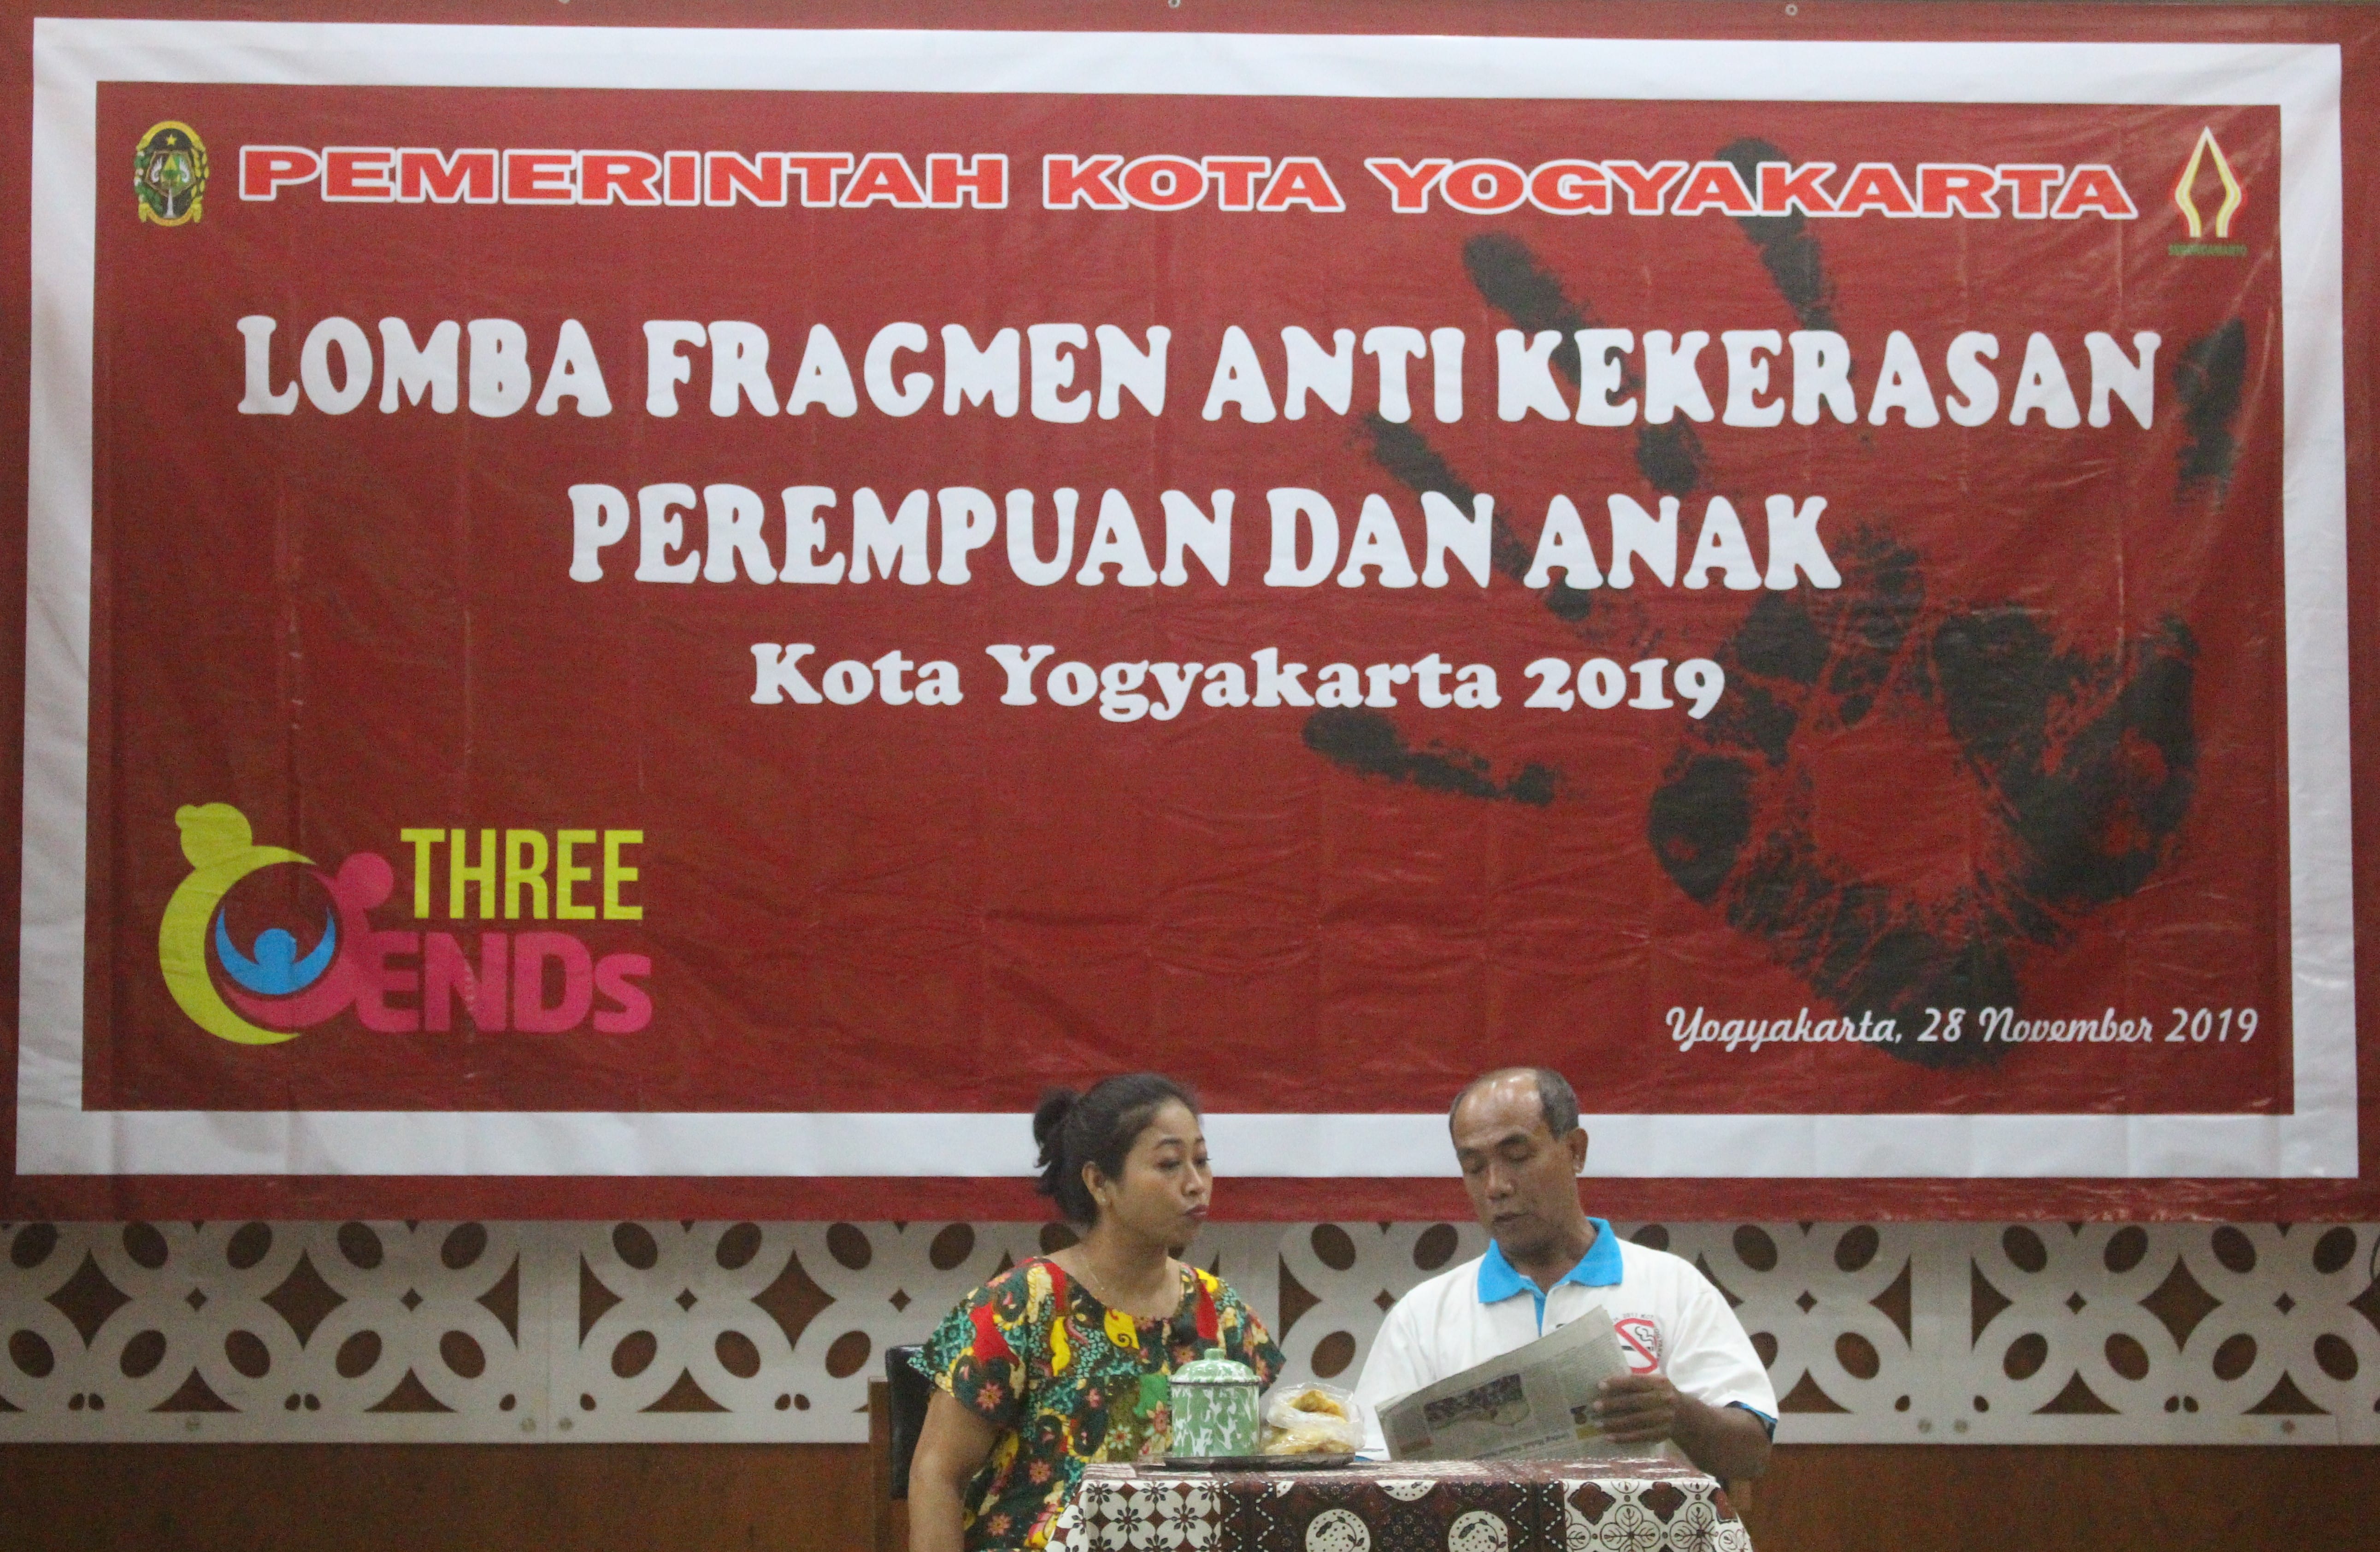 Lomba  Fragmen  Anti Kekerasan Perempuan dan Anak  Kota Yogyakarta